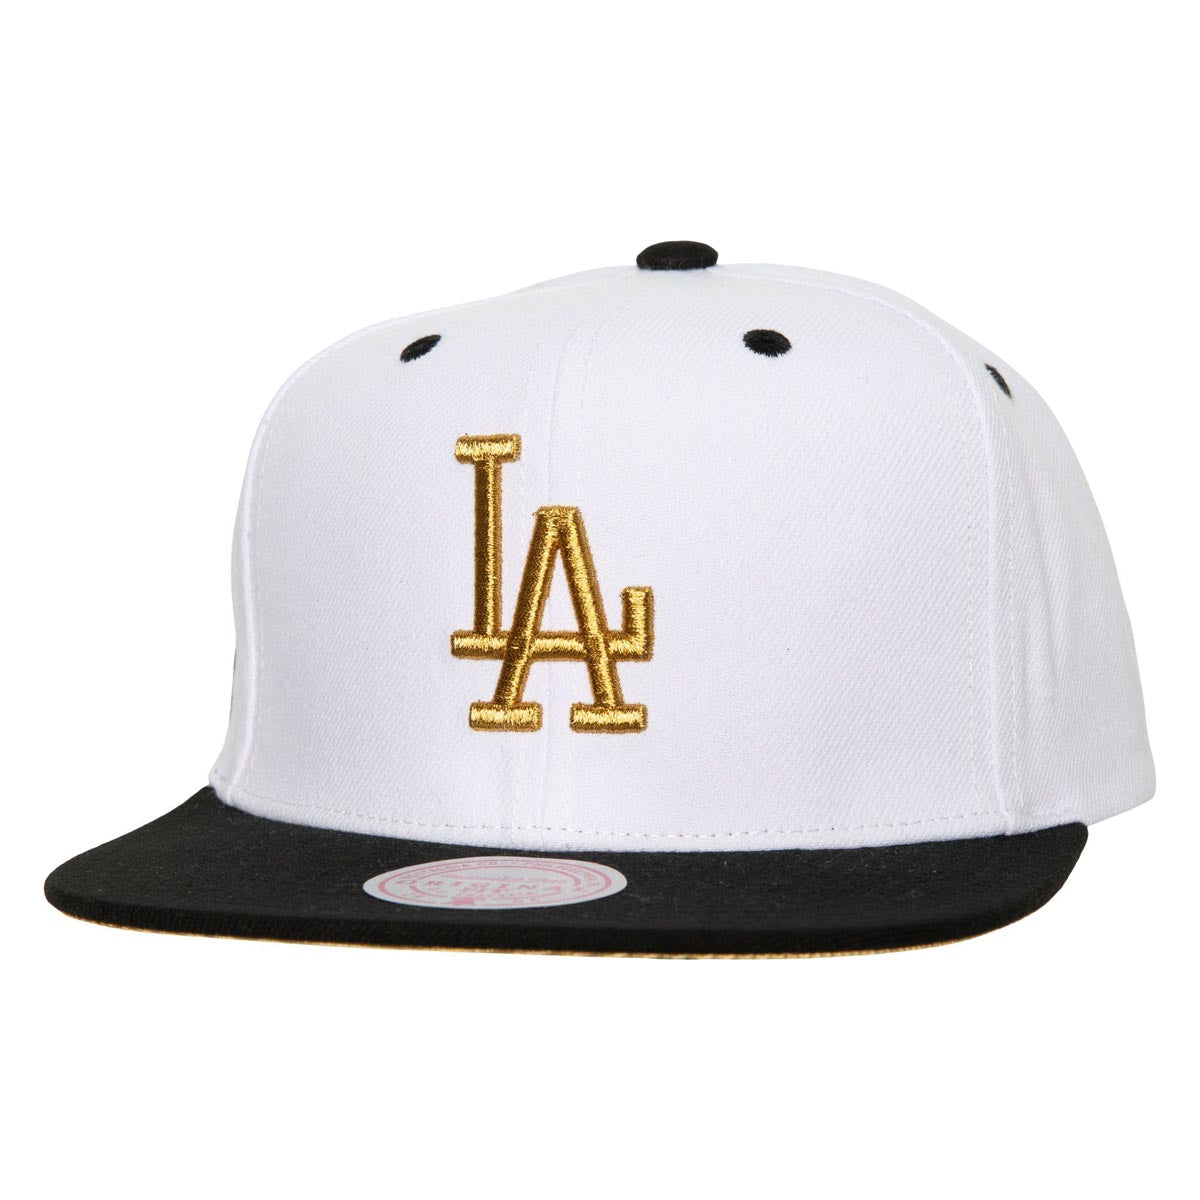 Mitchell & Ness x MLB Mvp Snapback Coop Dodgers Hat - White image 1